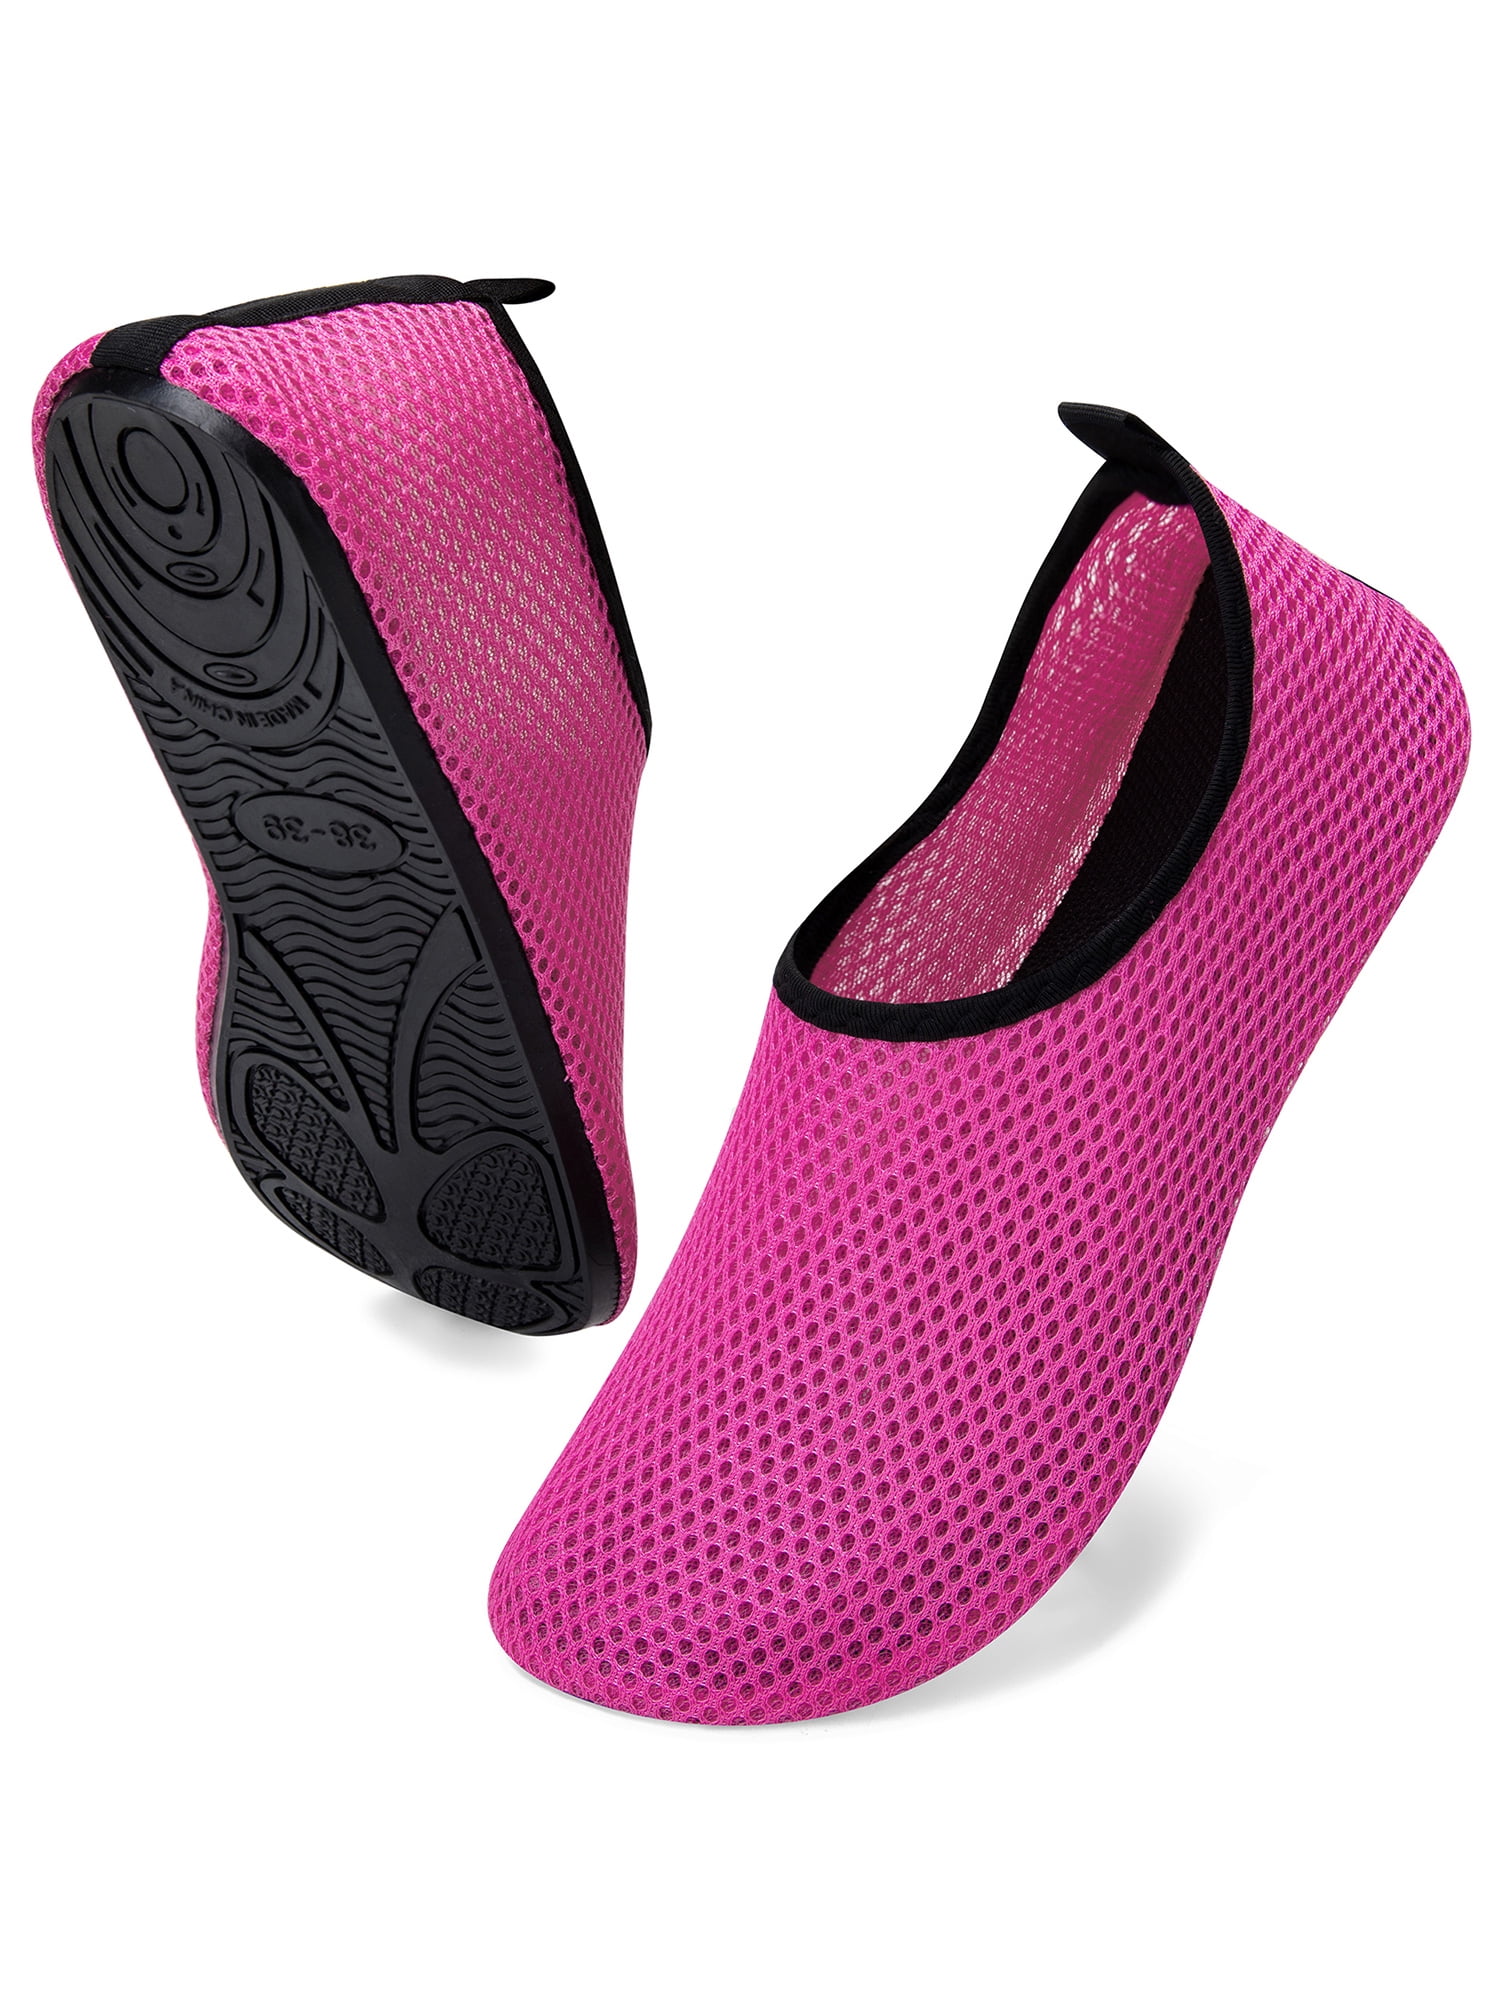 Unisex Water Shoes Summer Outdoor Beach Swim Aqua Socks Quick-Dry Barefoot Yoga 